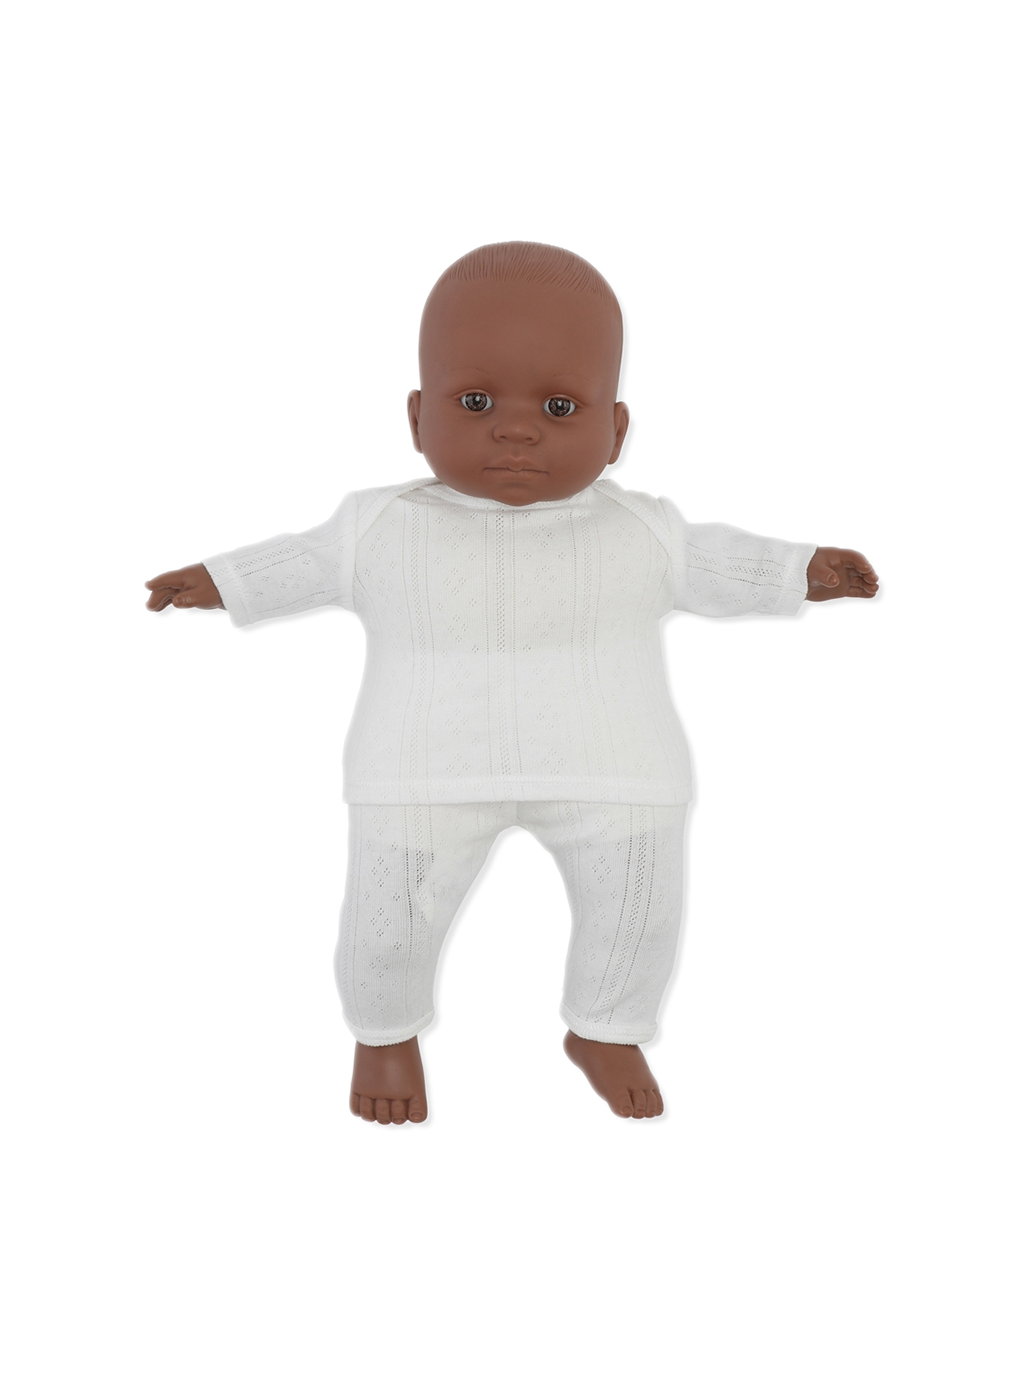 doll with a soft tummy